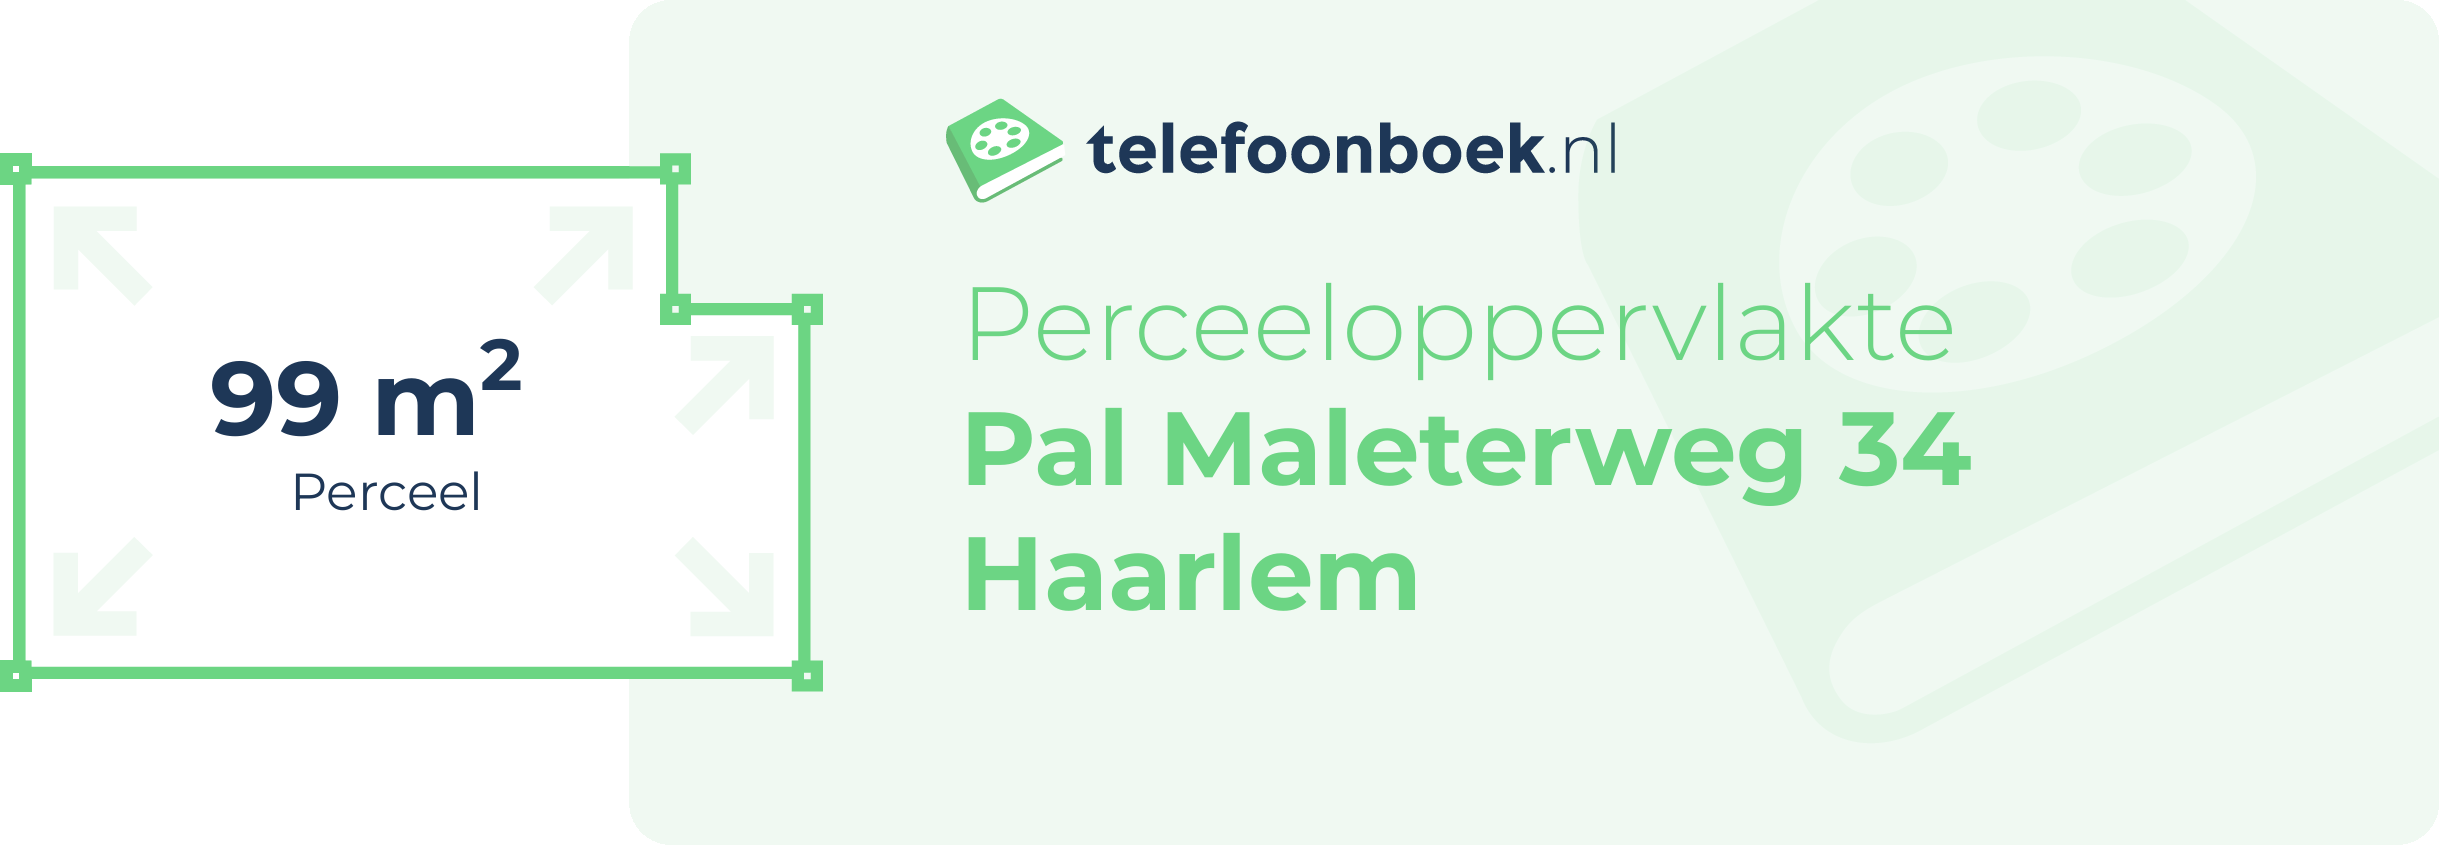 Perceeloppervlakte Pal Maleterweg 34 Haarlem